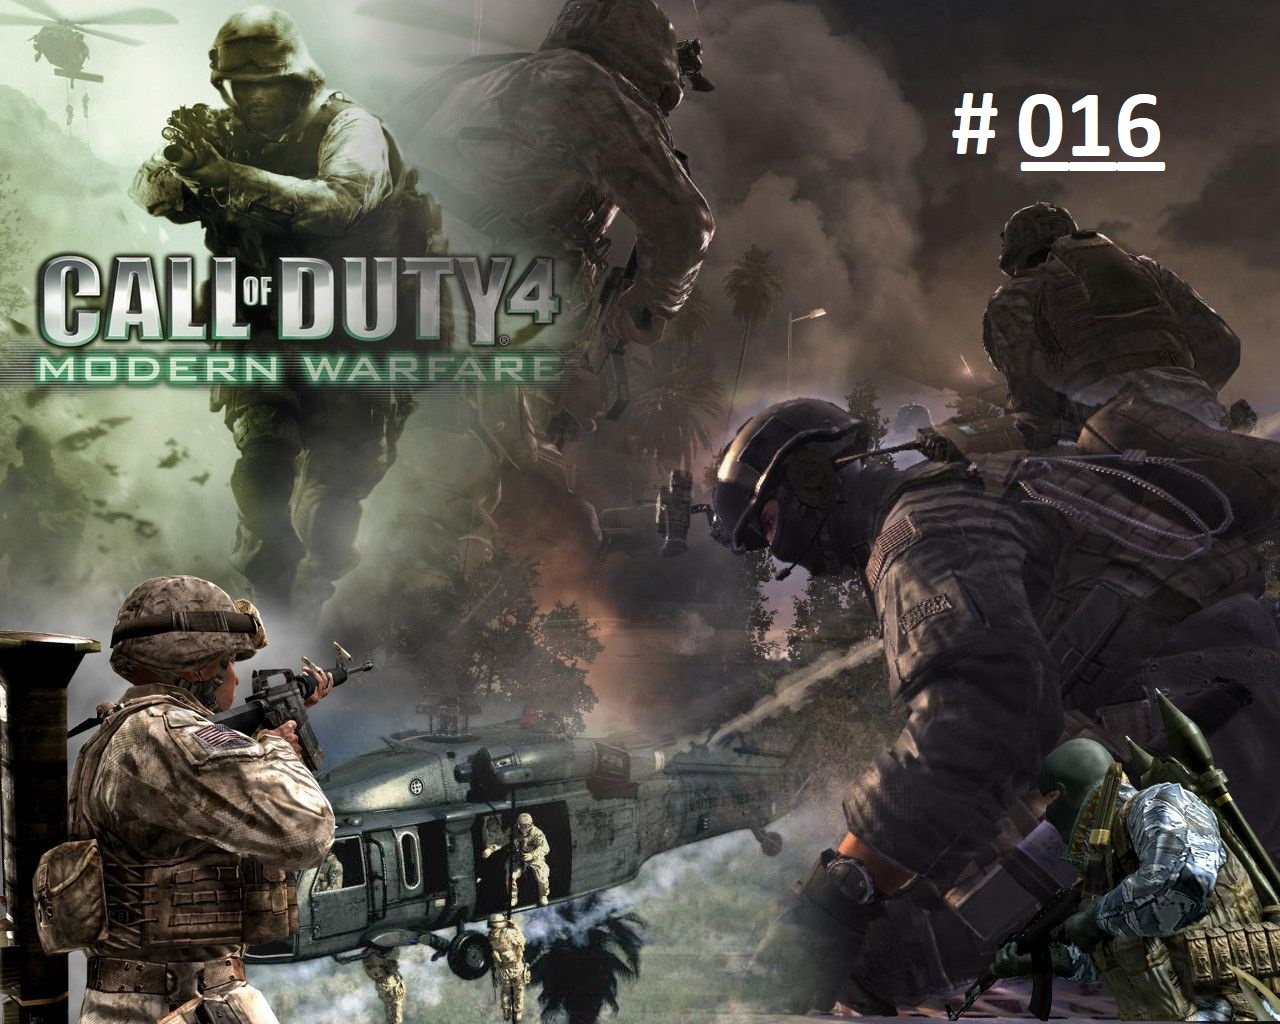 Call of Duty 4: Modern Warfare. Прохождение игры 2007. Часть 16 / Миссия  "No Fighting In The War"